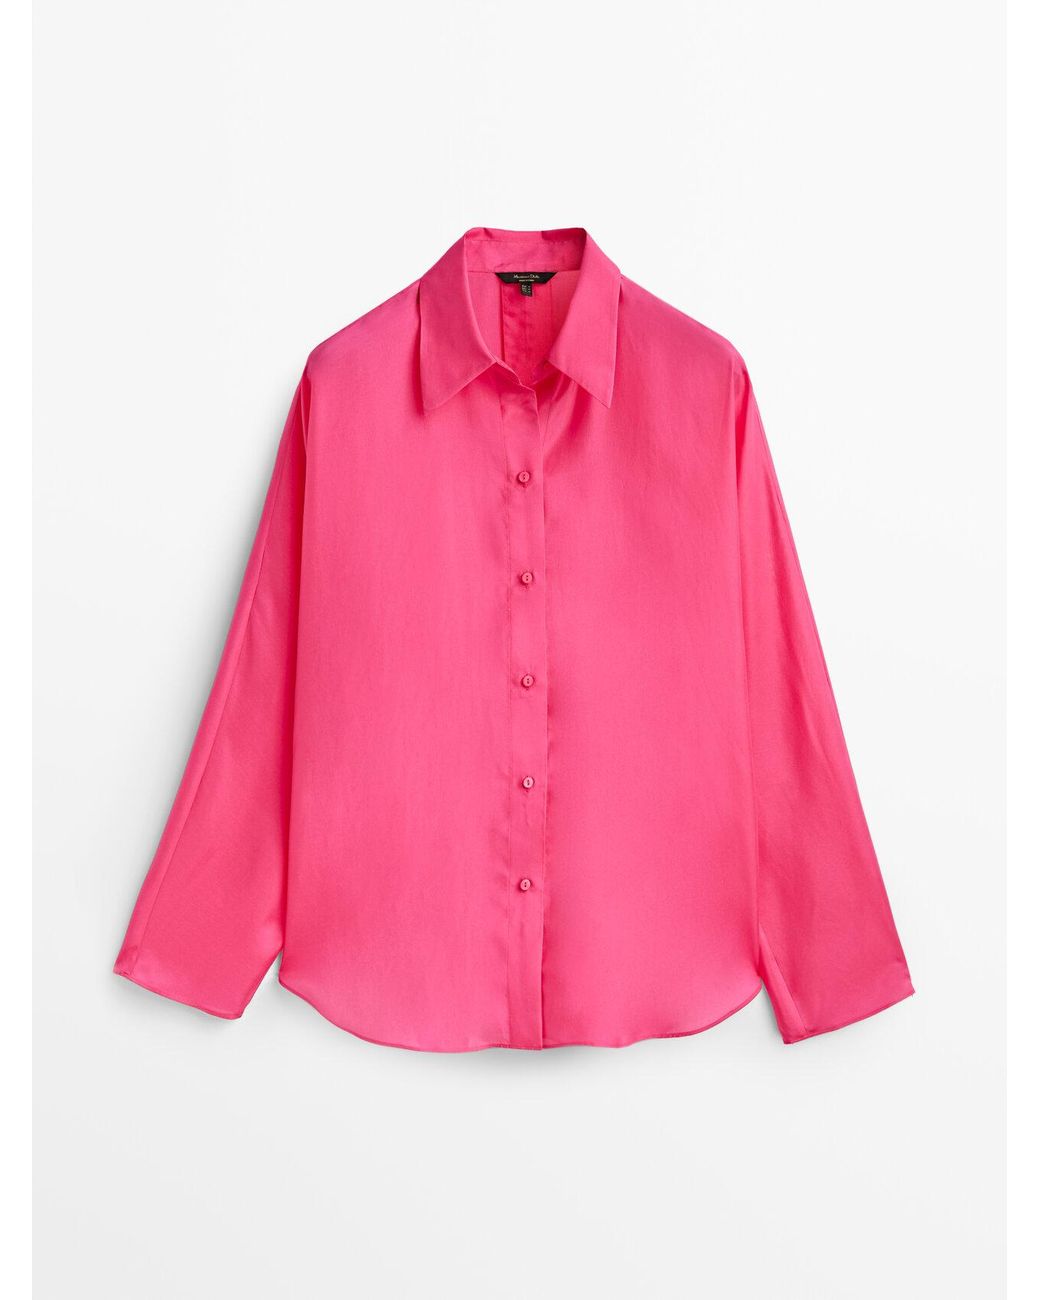 MASSIMO DUTTI 100% Silk Shirt in Fuchsia (Pink) | Lyst